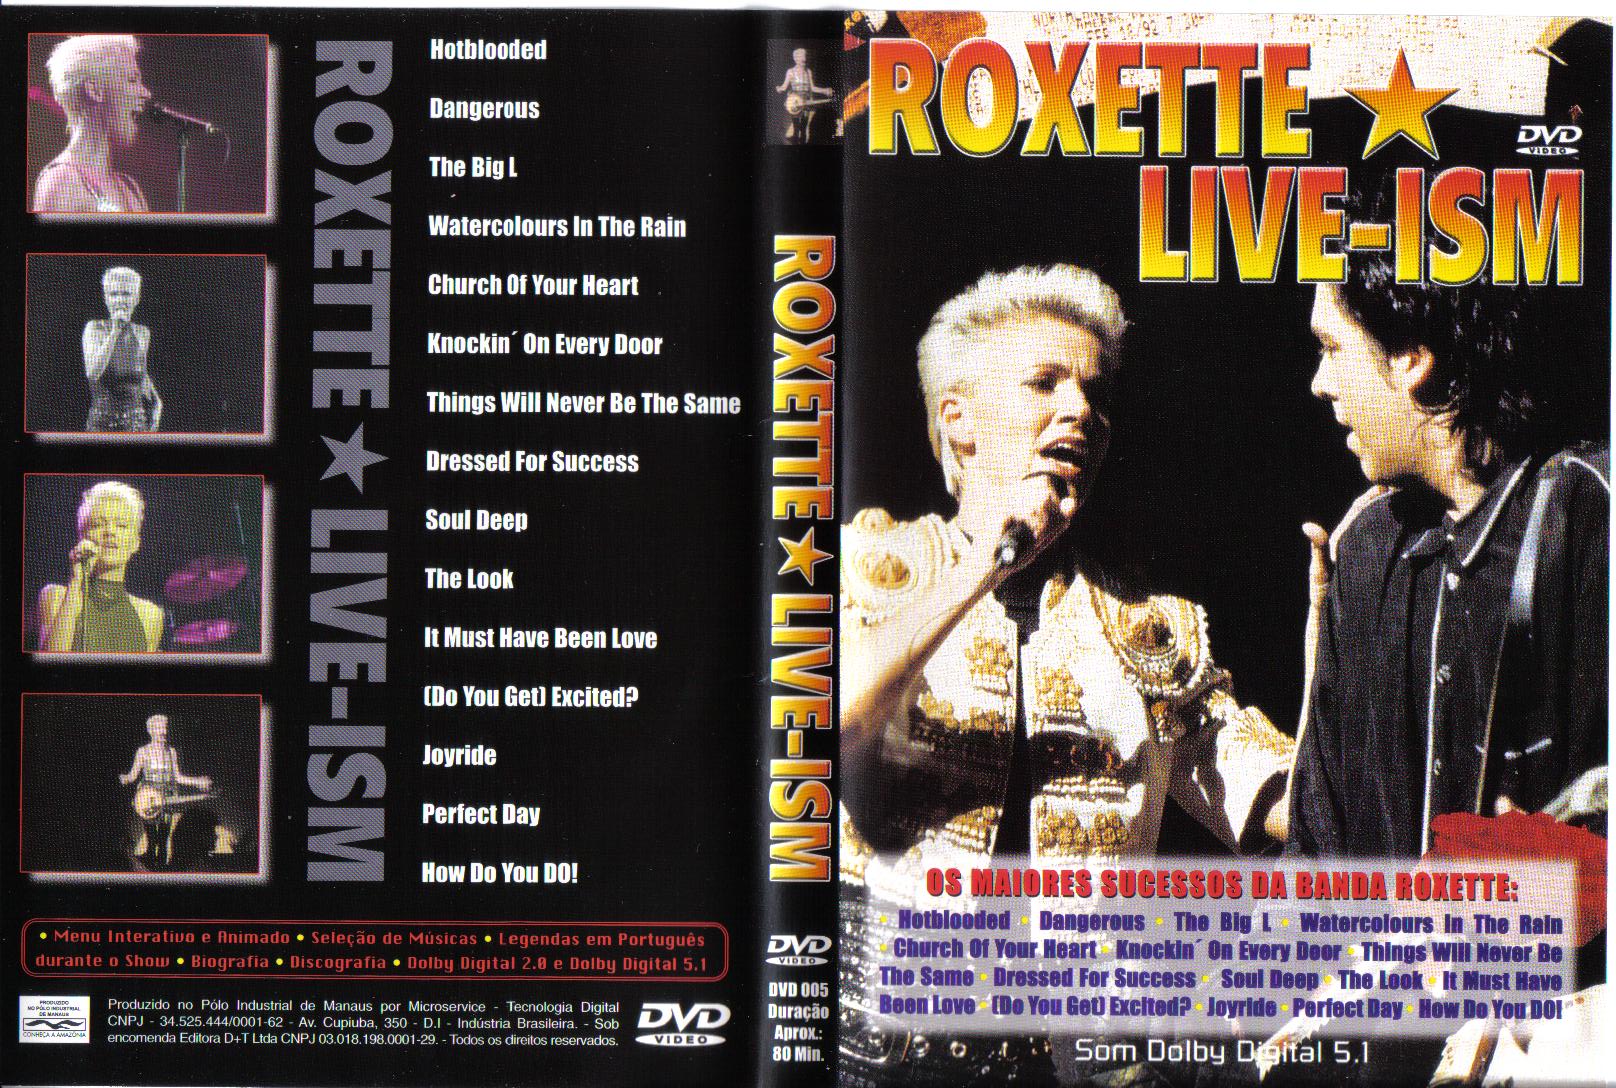 Jaquette DVD Roxette Live Ism